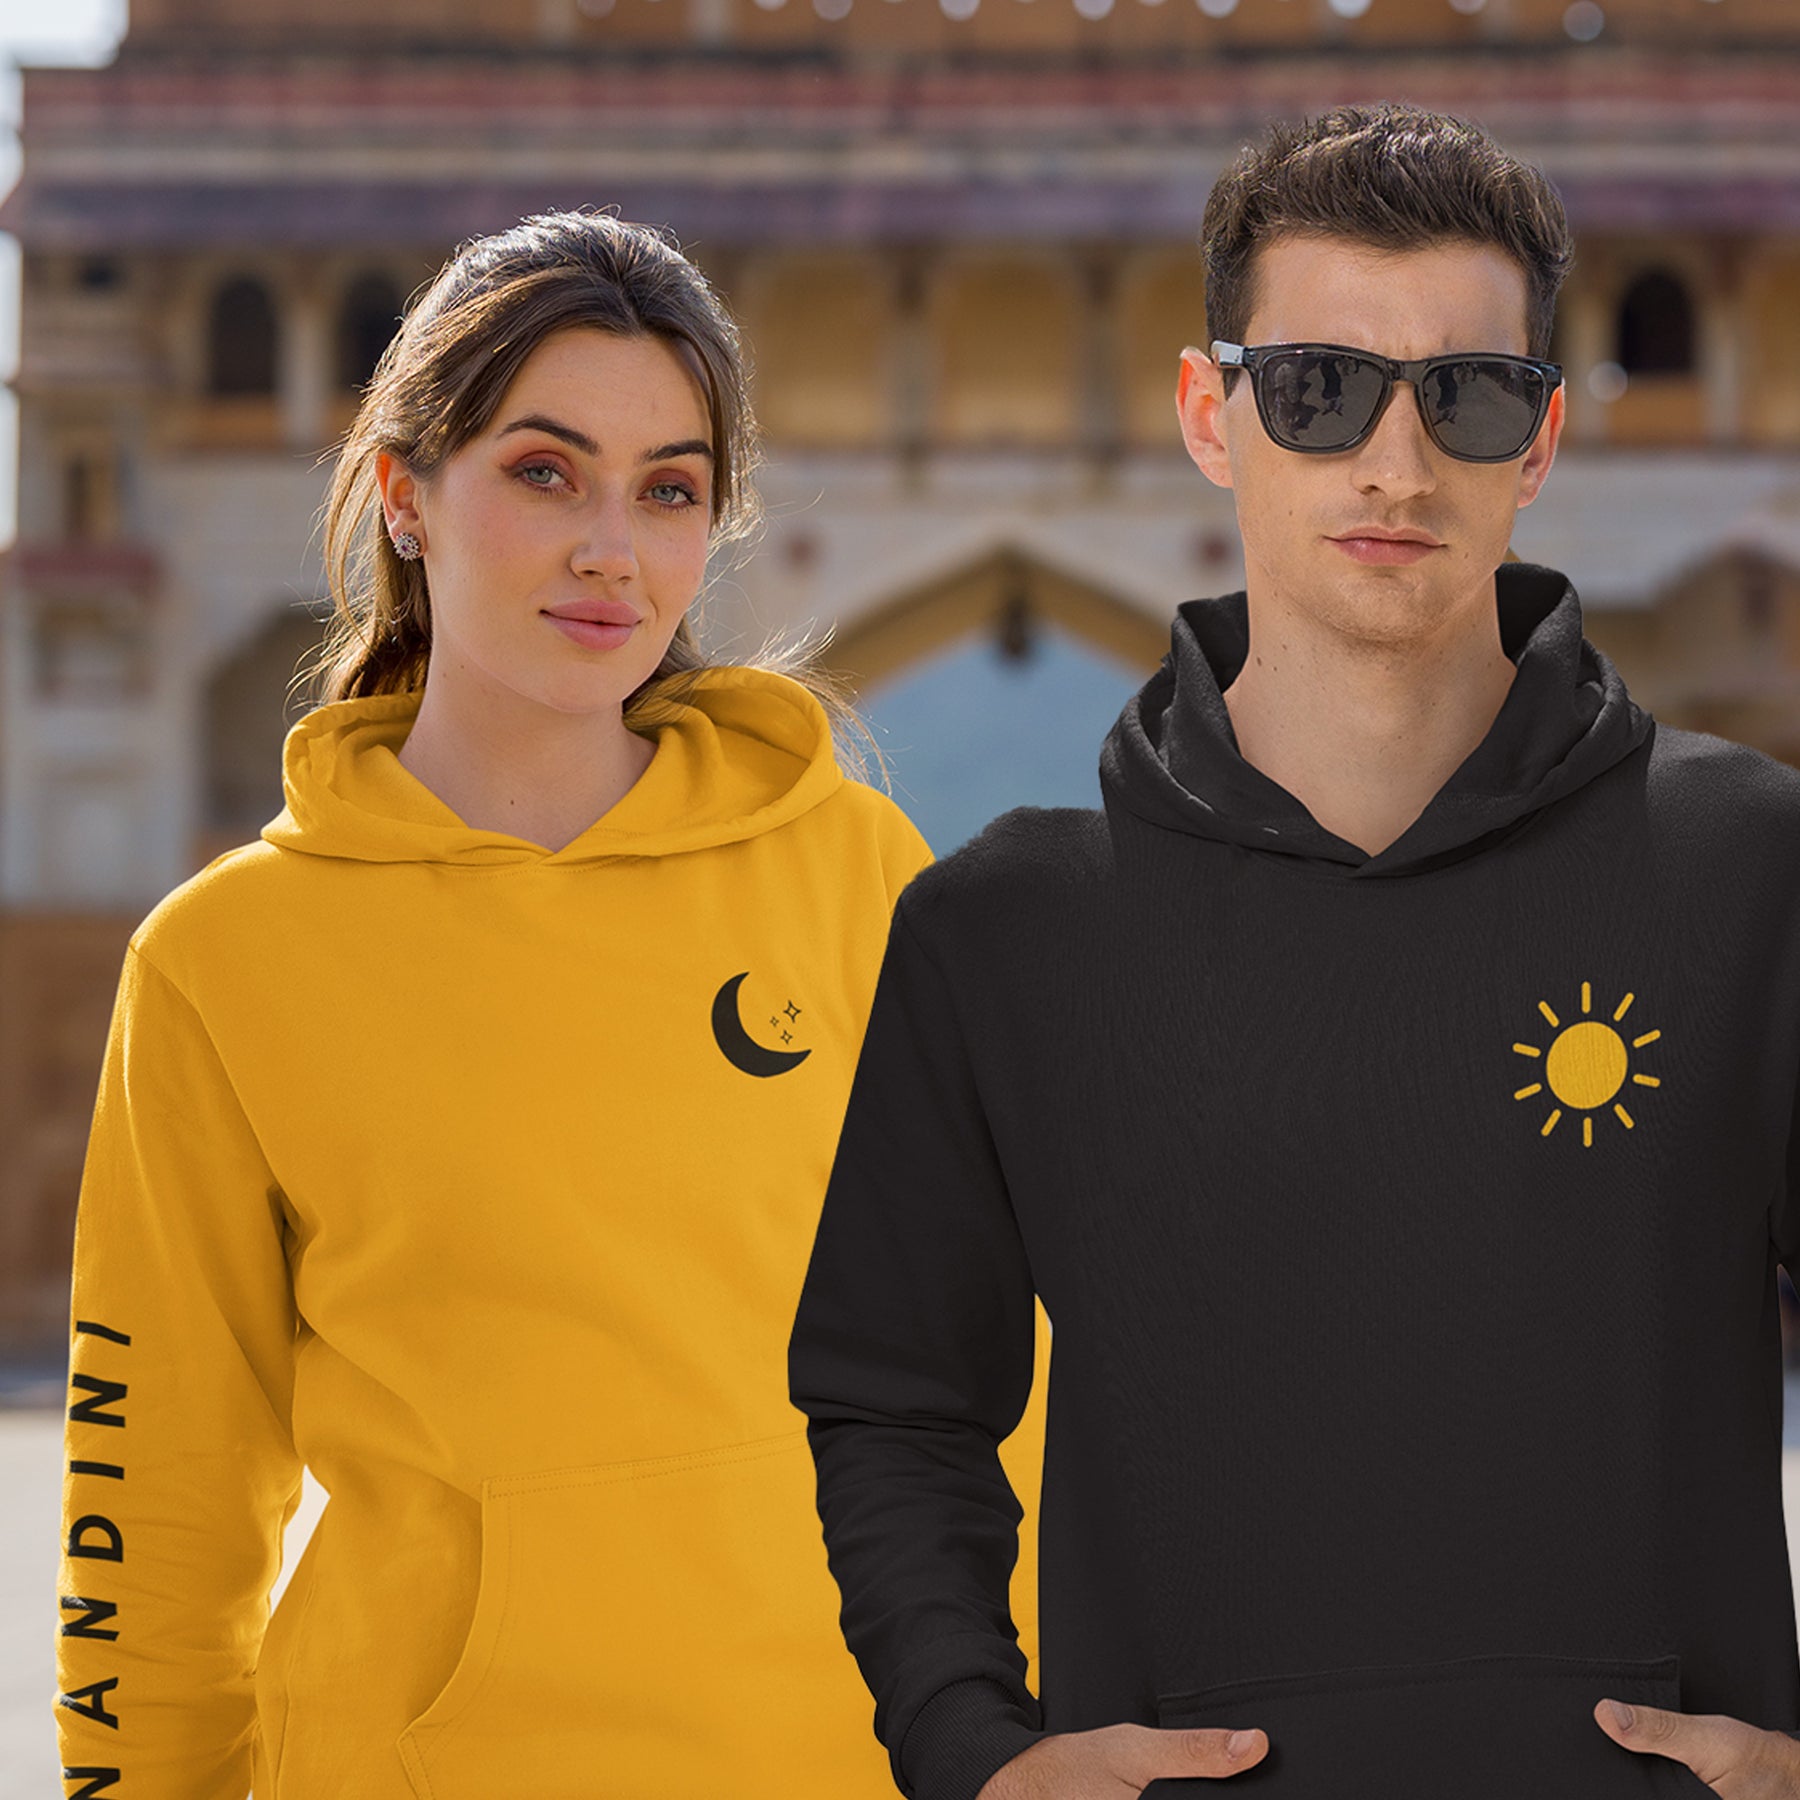 Sun Moon Personalised Name On Sleeve Black Yellow Couple Hoodies